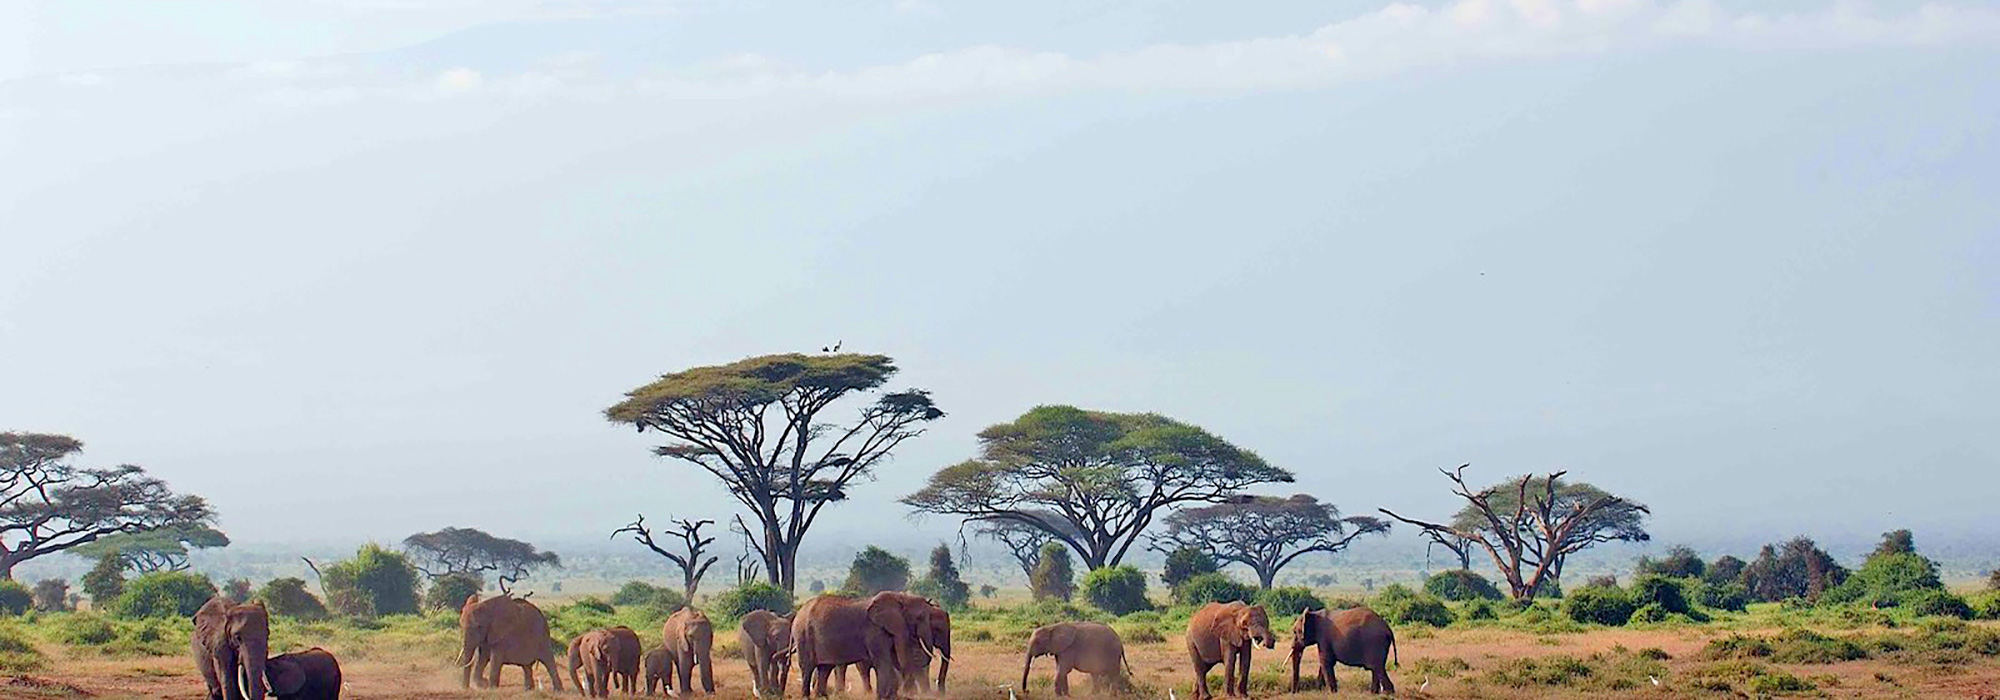 Amboseli wildlife